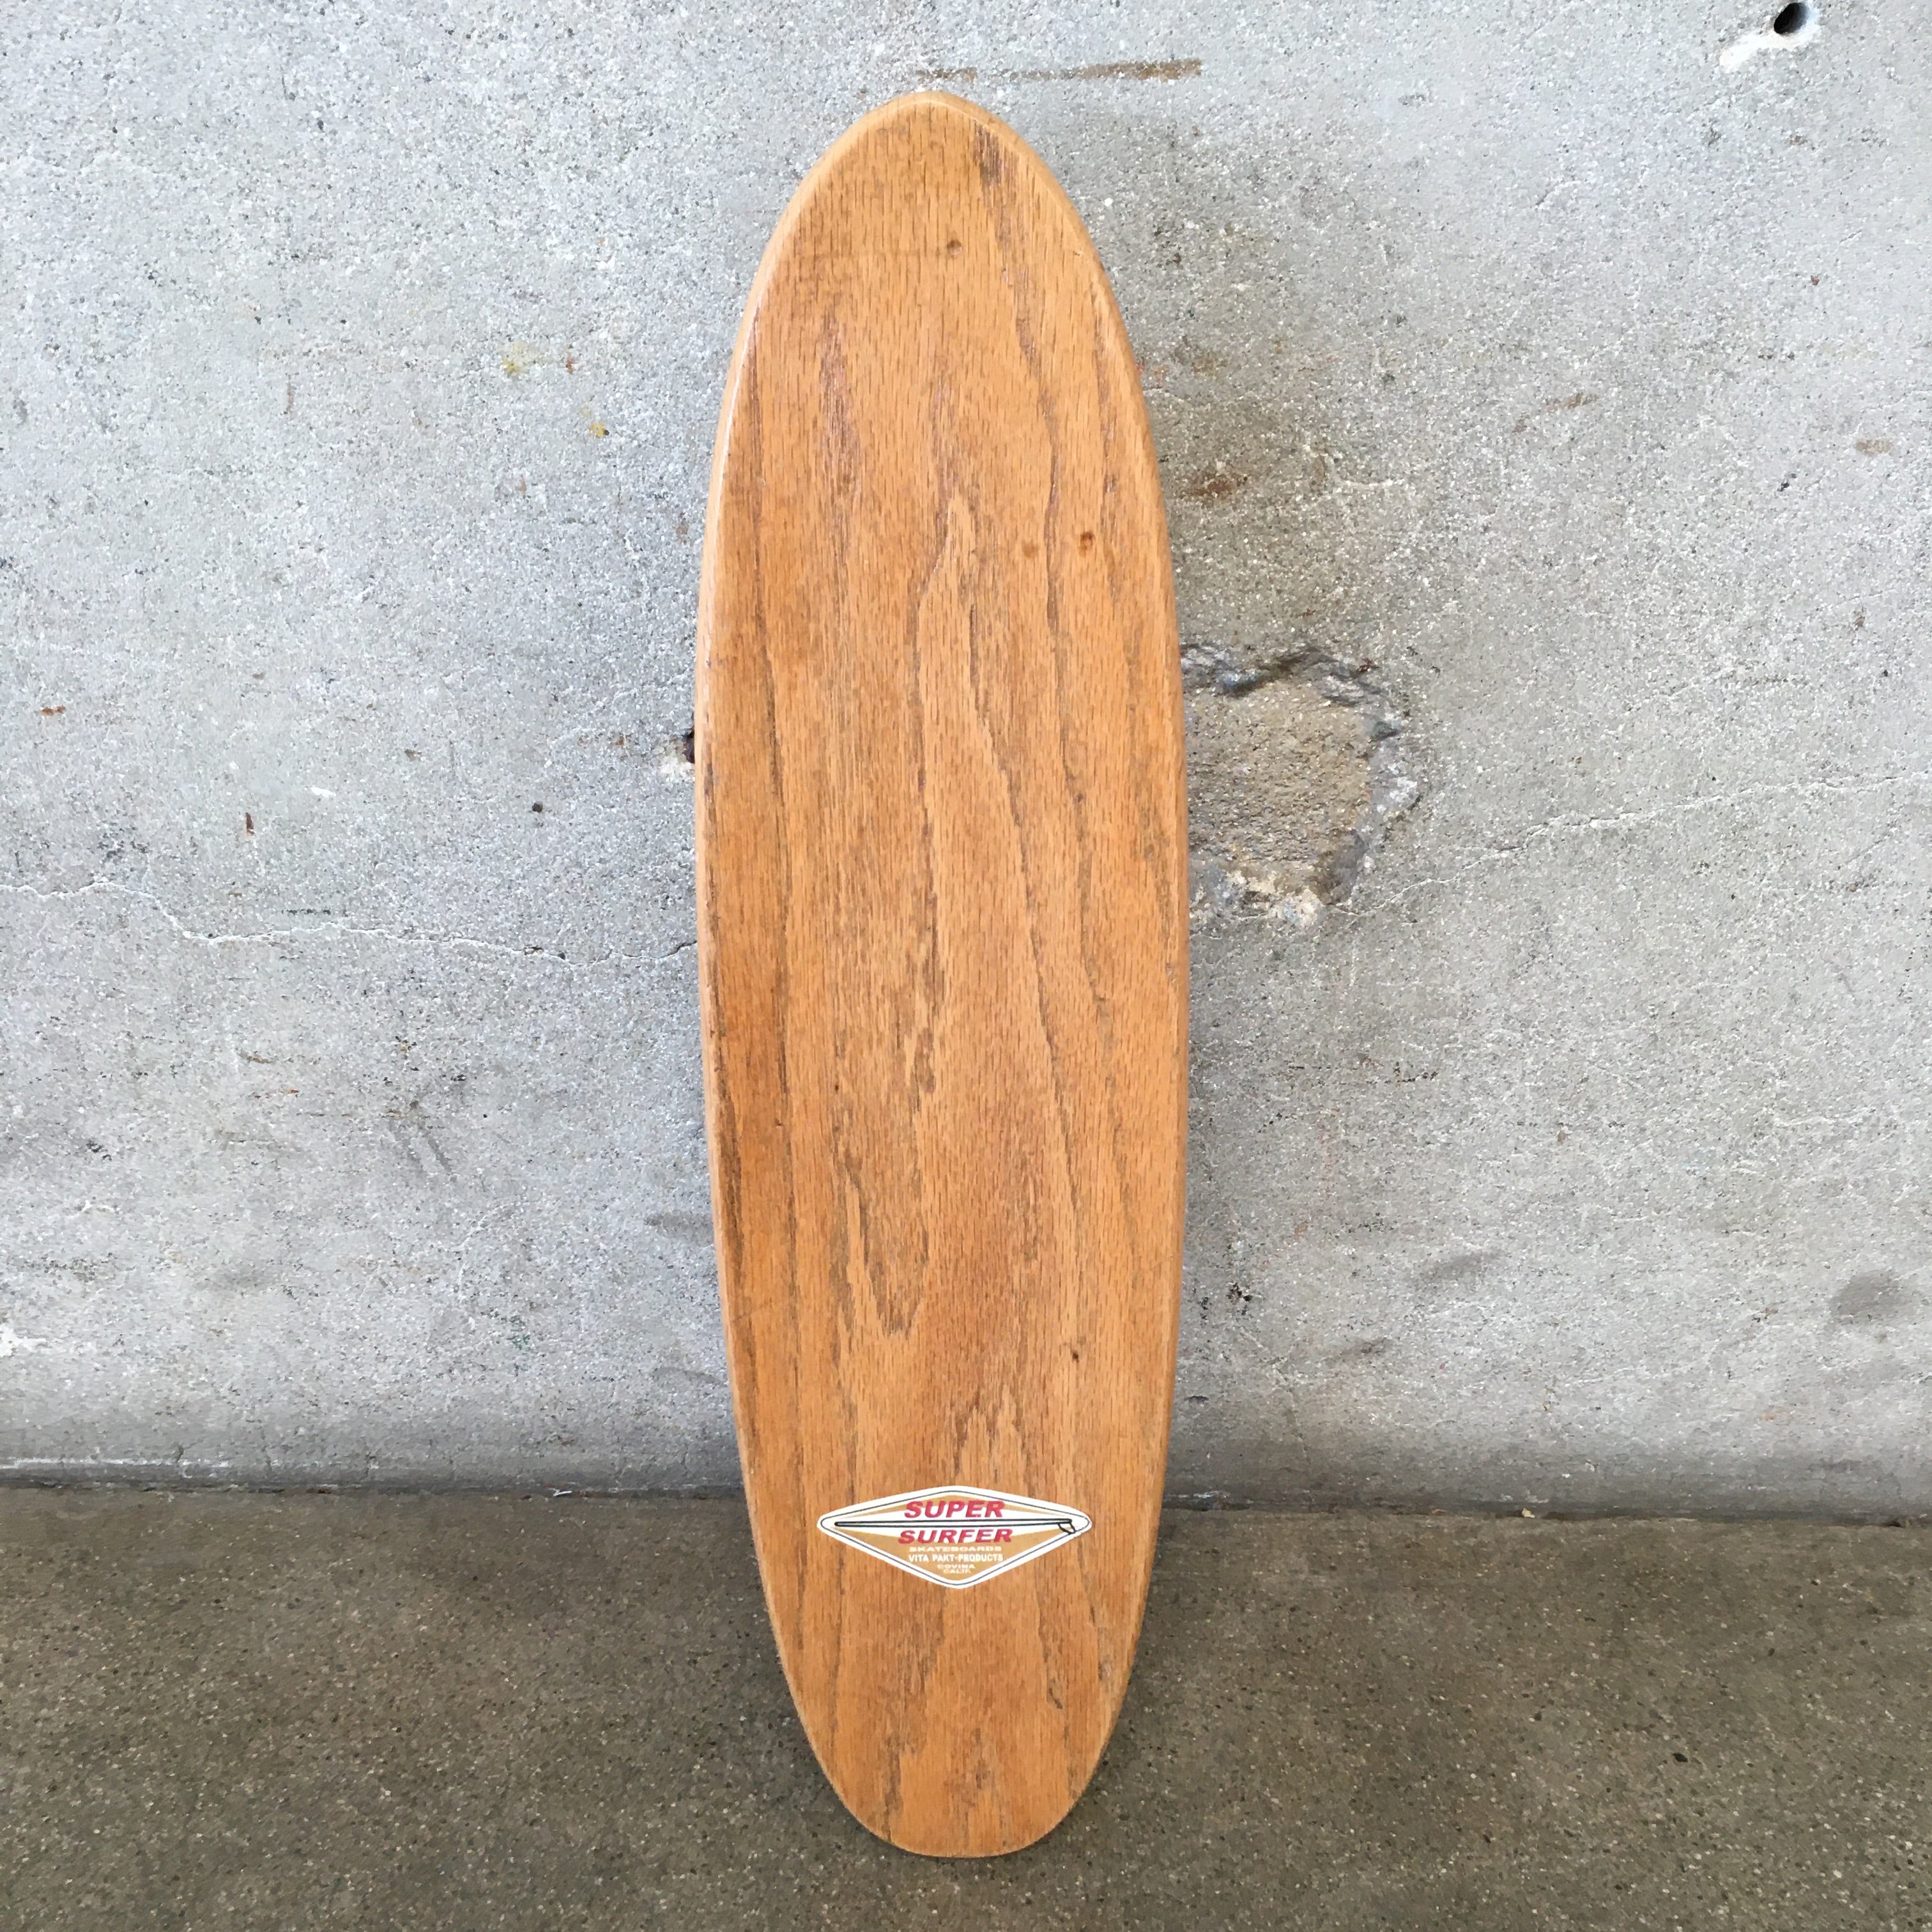 Sidewalk Surfer – Skate and Annoy